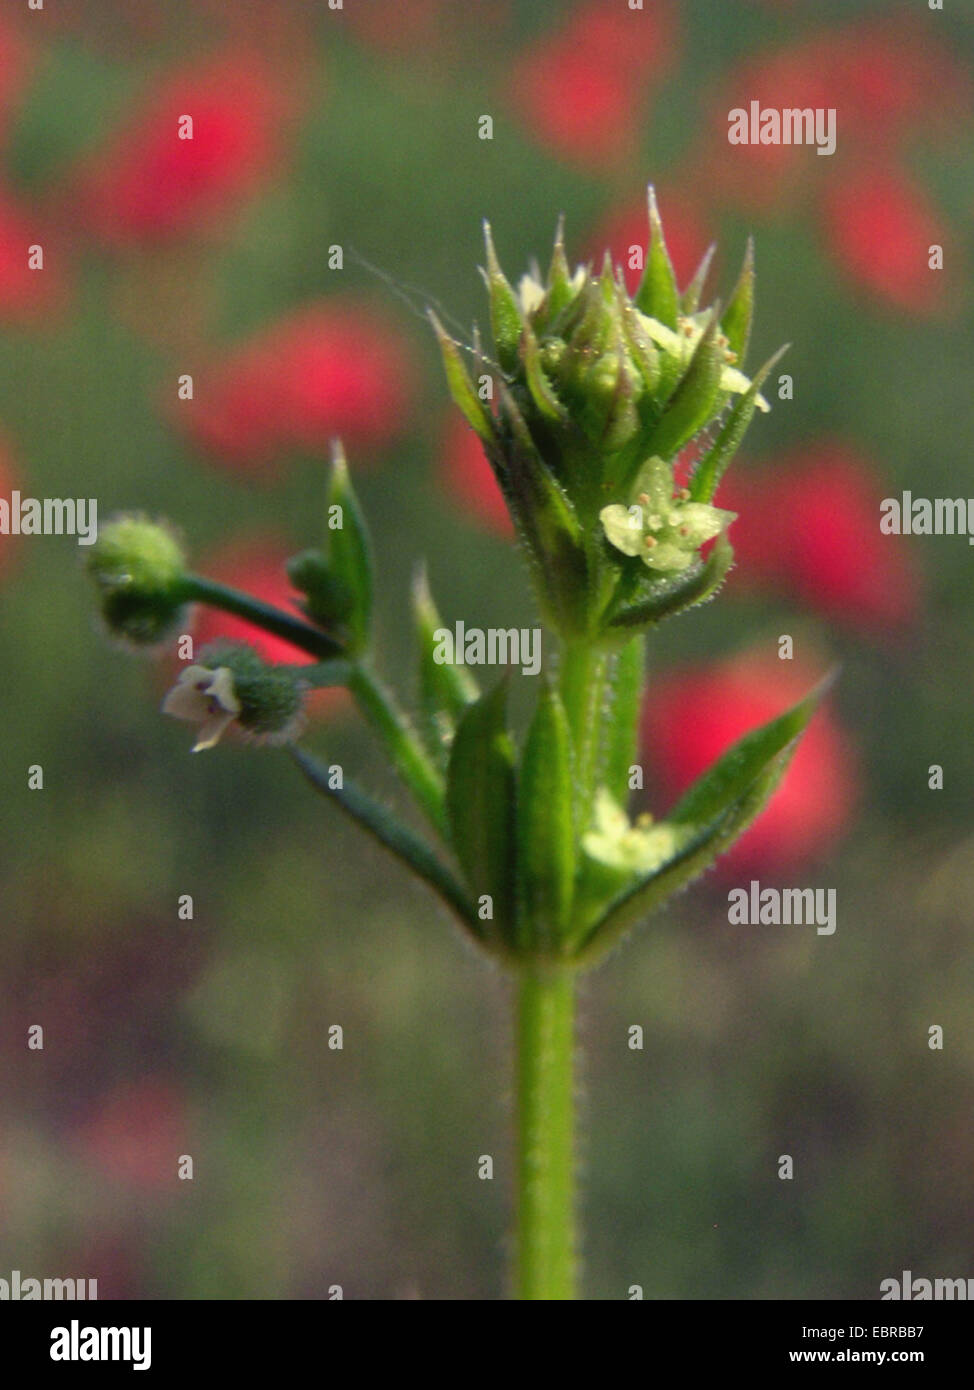 False cleavers, Marin county bedstraw (Galium spurium), blooming, Poland Stock Photo